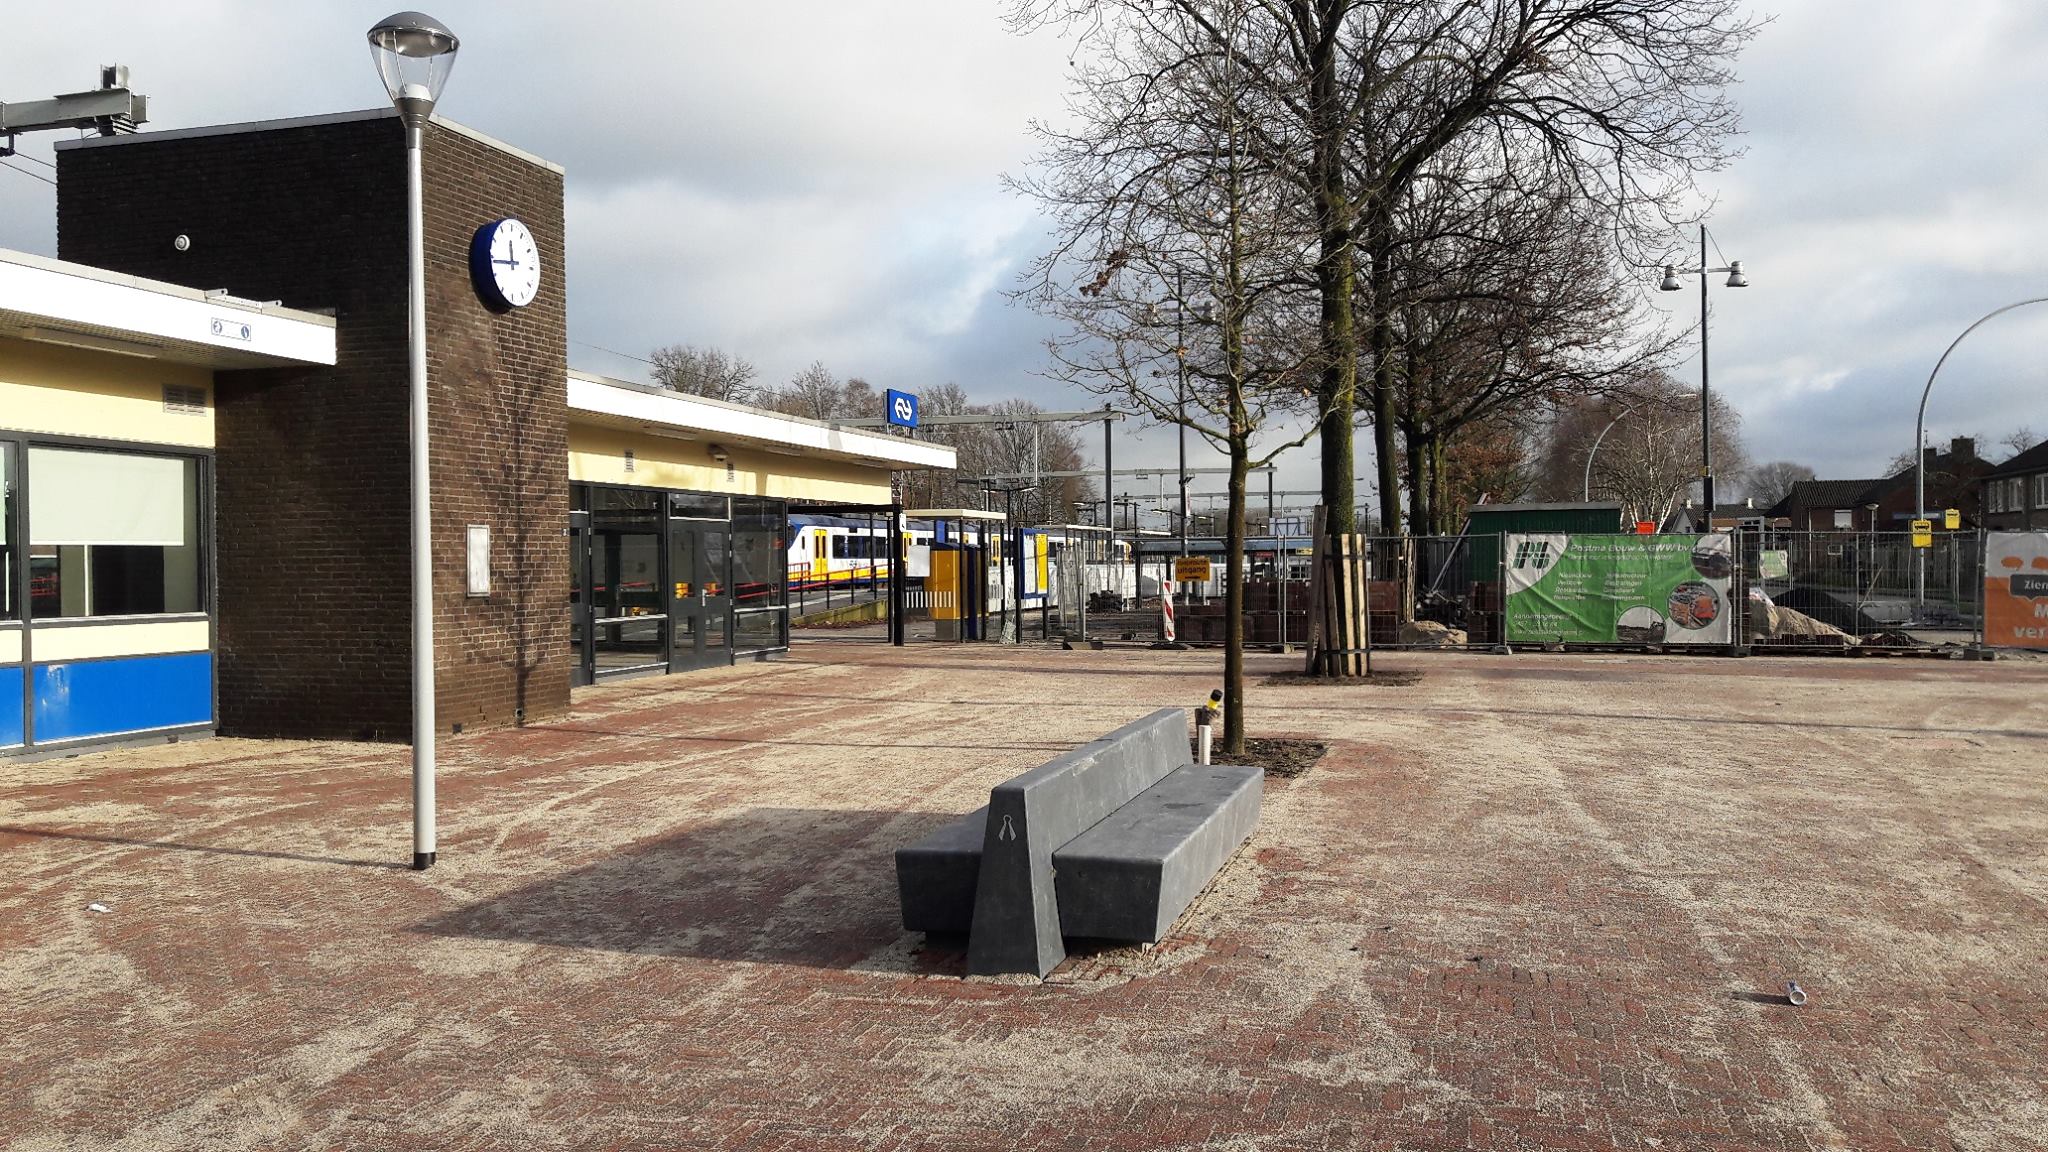 Hedendaags Cameratoezicht fietsenstalling op NS station Wijchen - Wijchen= DE-11